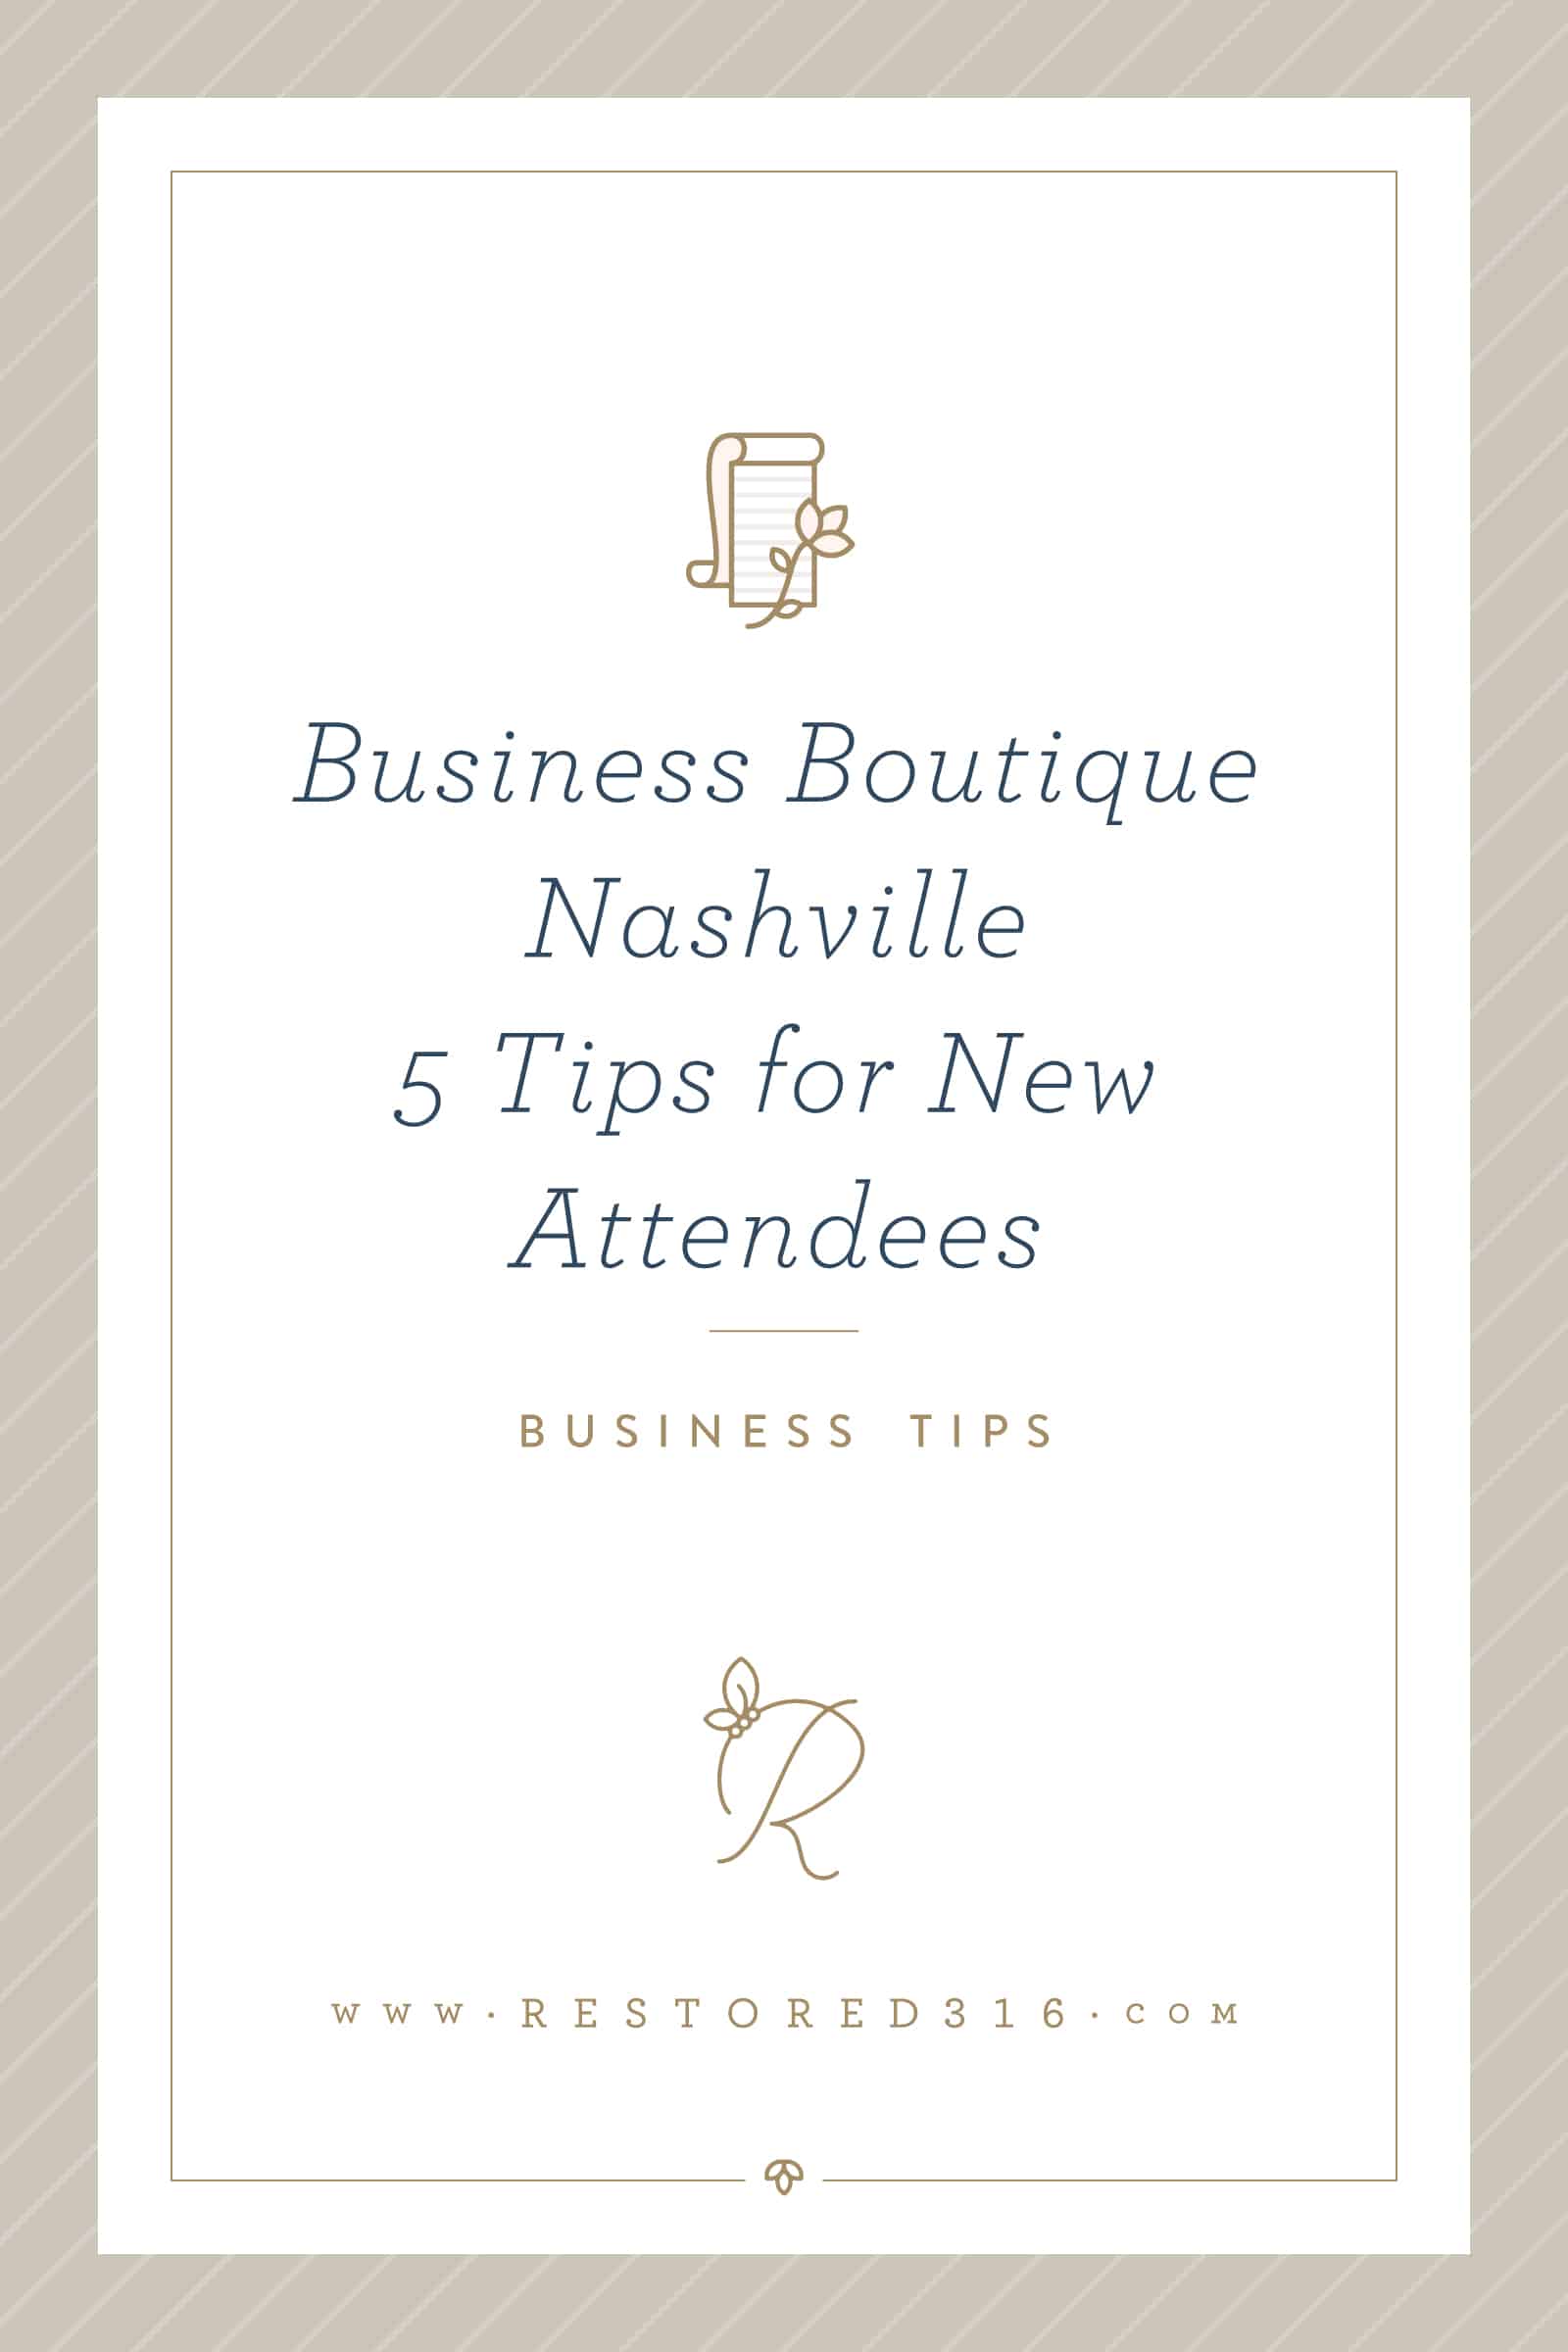 Learn more about Business Boutique Nashville